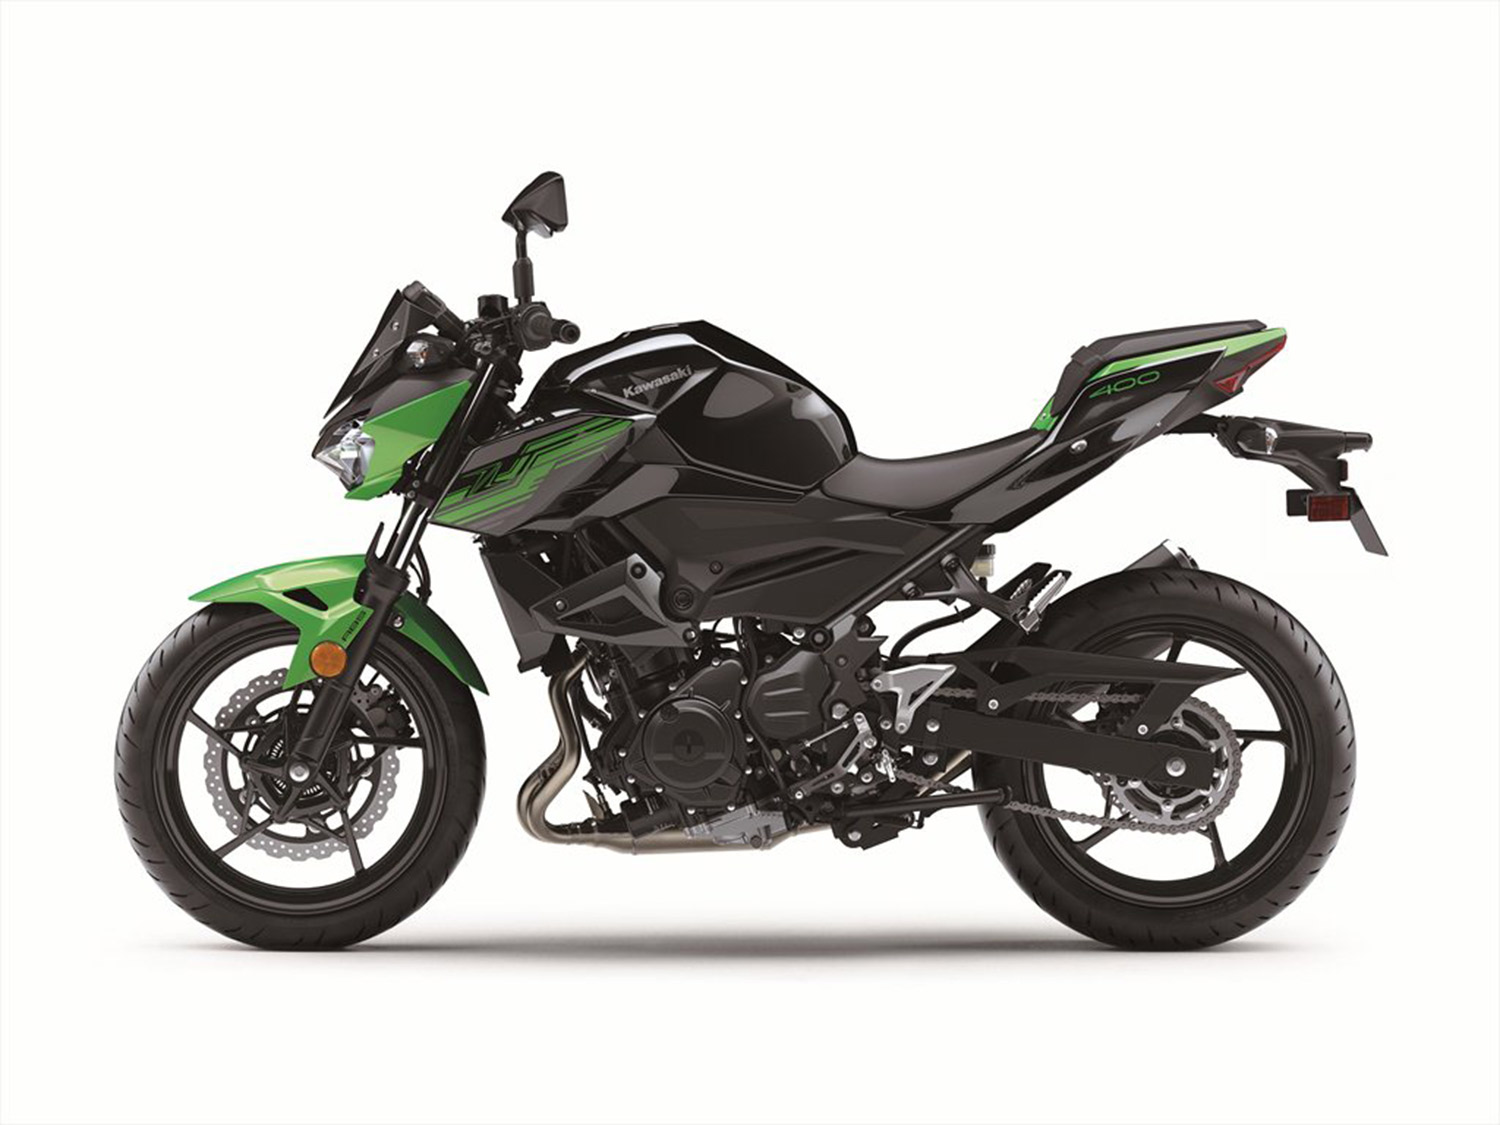 Interesse lighed dedikation 2019 Kawasaki Z400 ABS | Cycle World